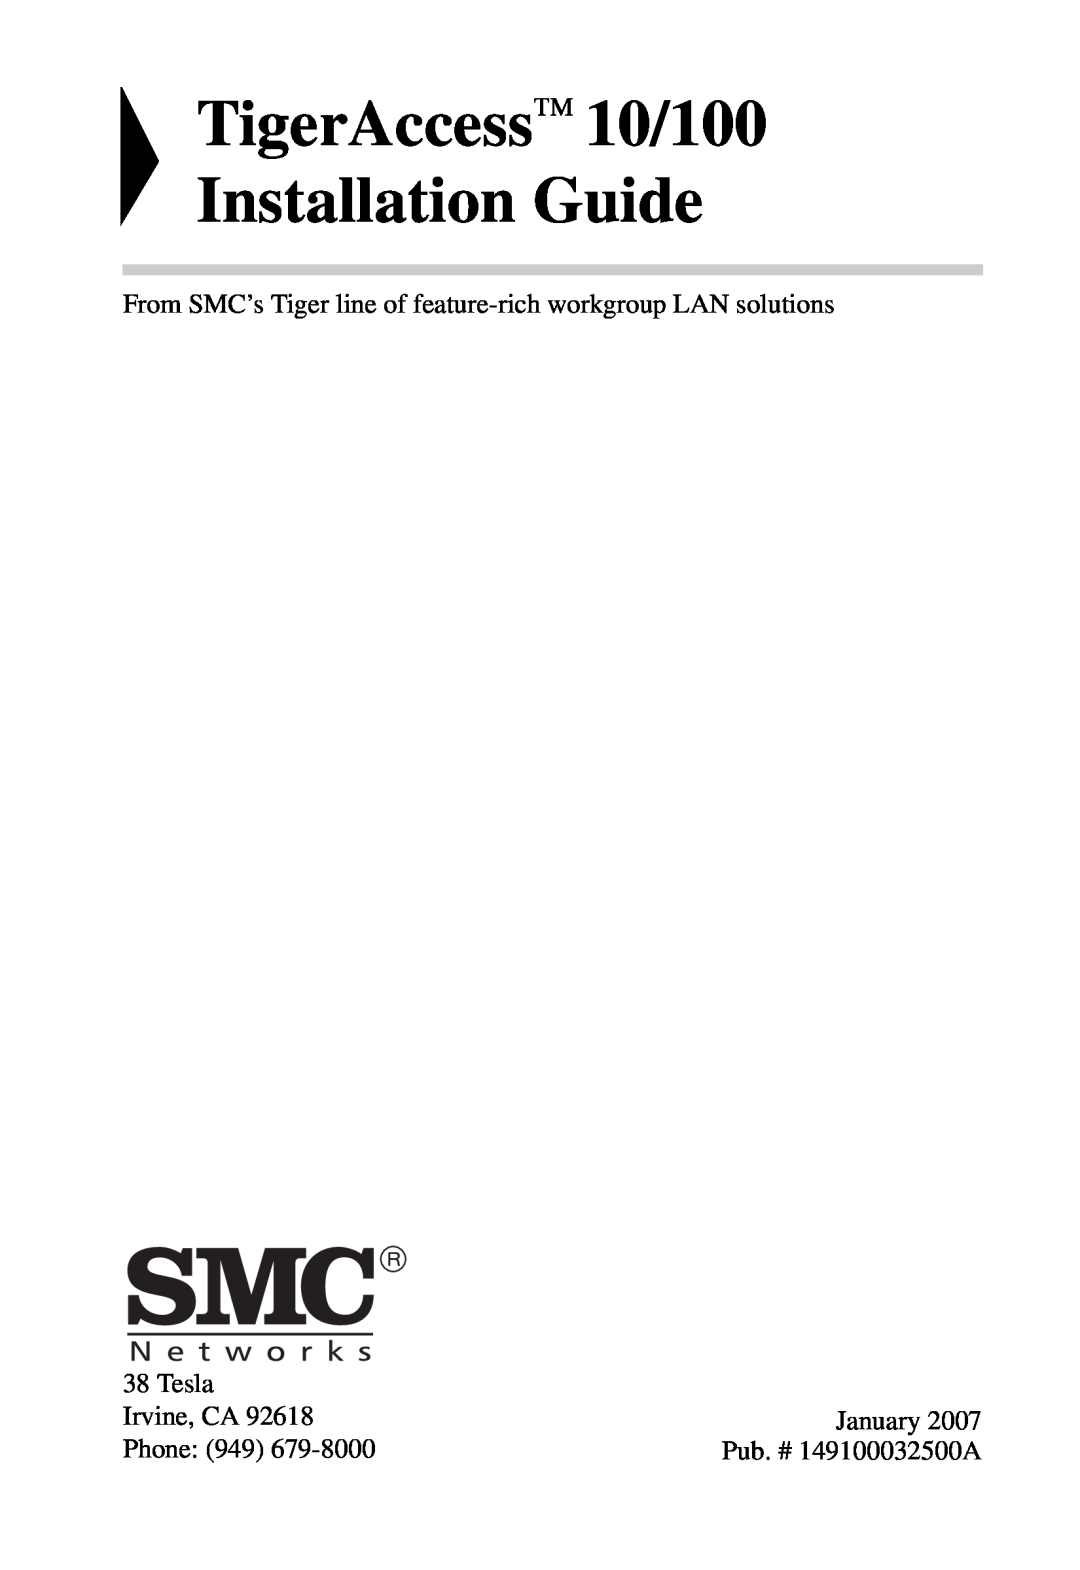 SMC Networks SMC7824M/FSW manual TigerAccess 10/100 Installation Guide, Tesla, Irvine, CA, January, Phone 949 